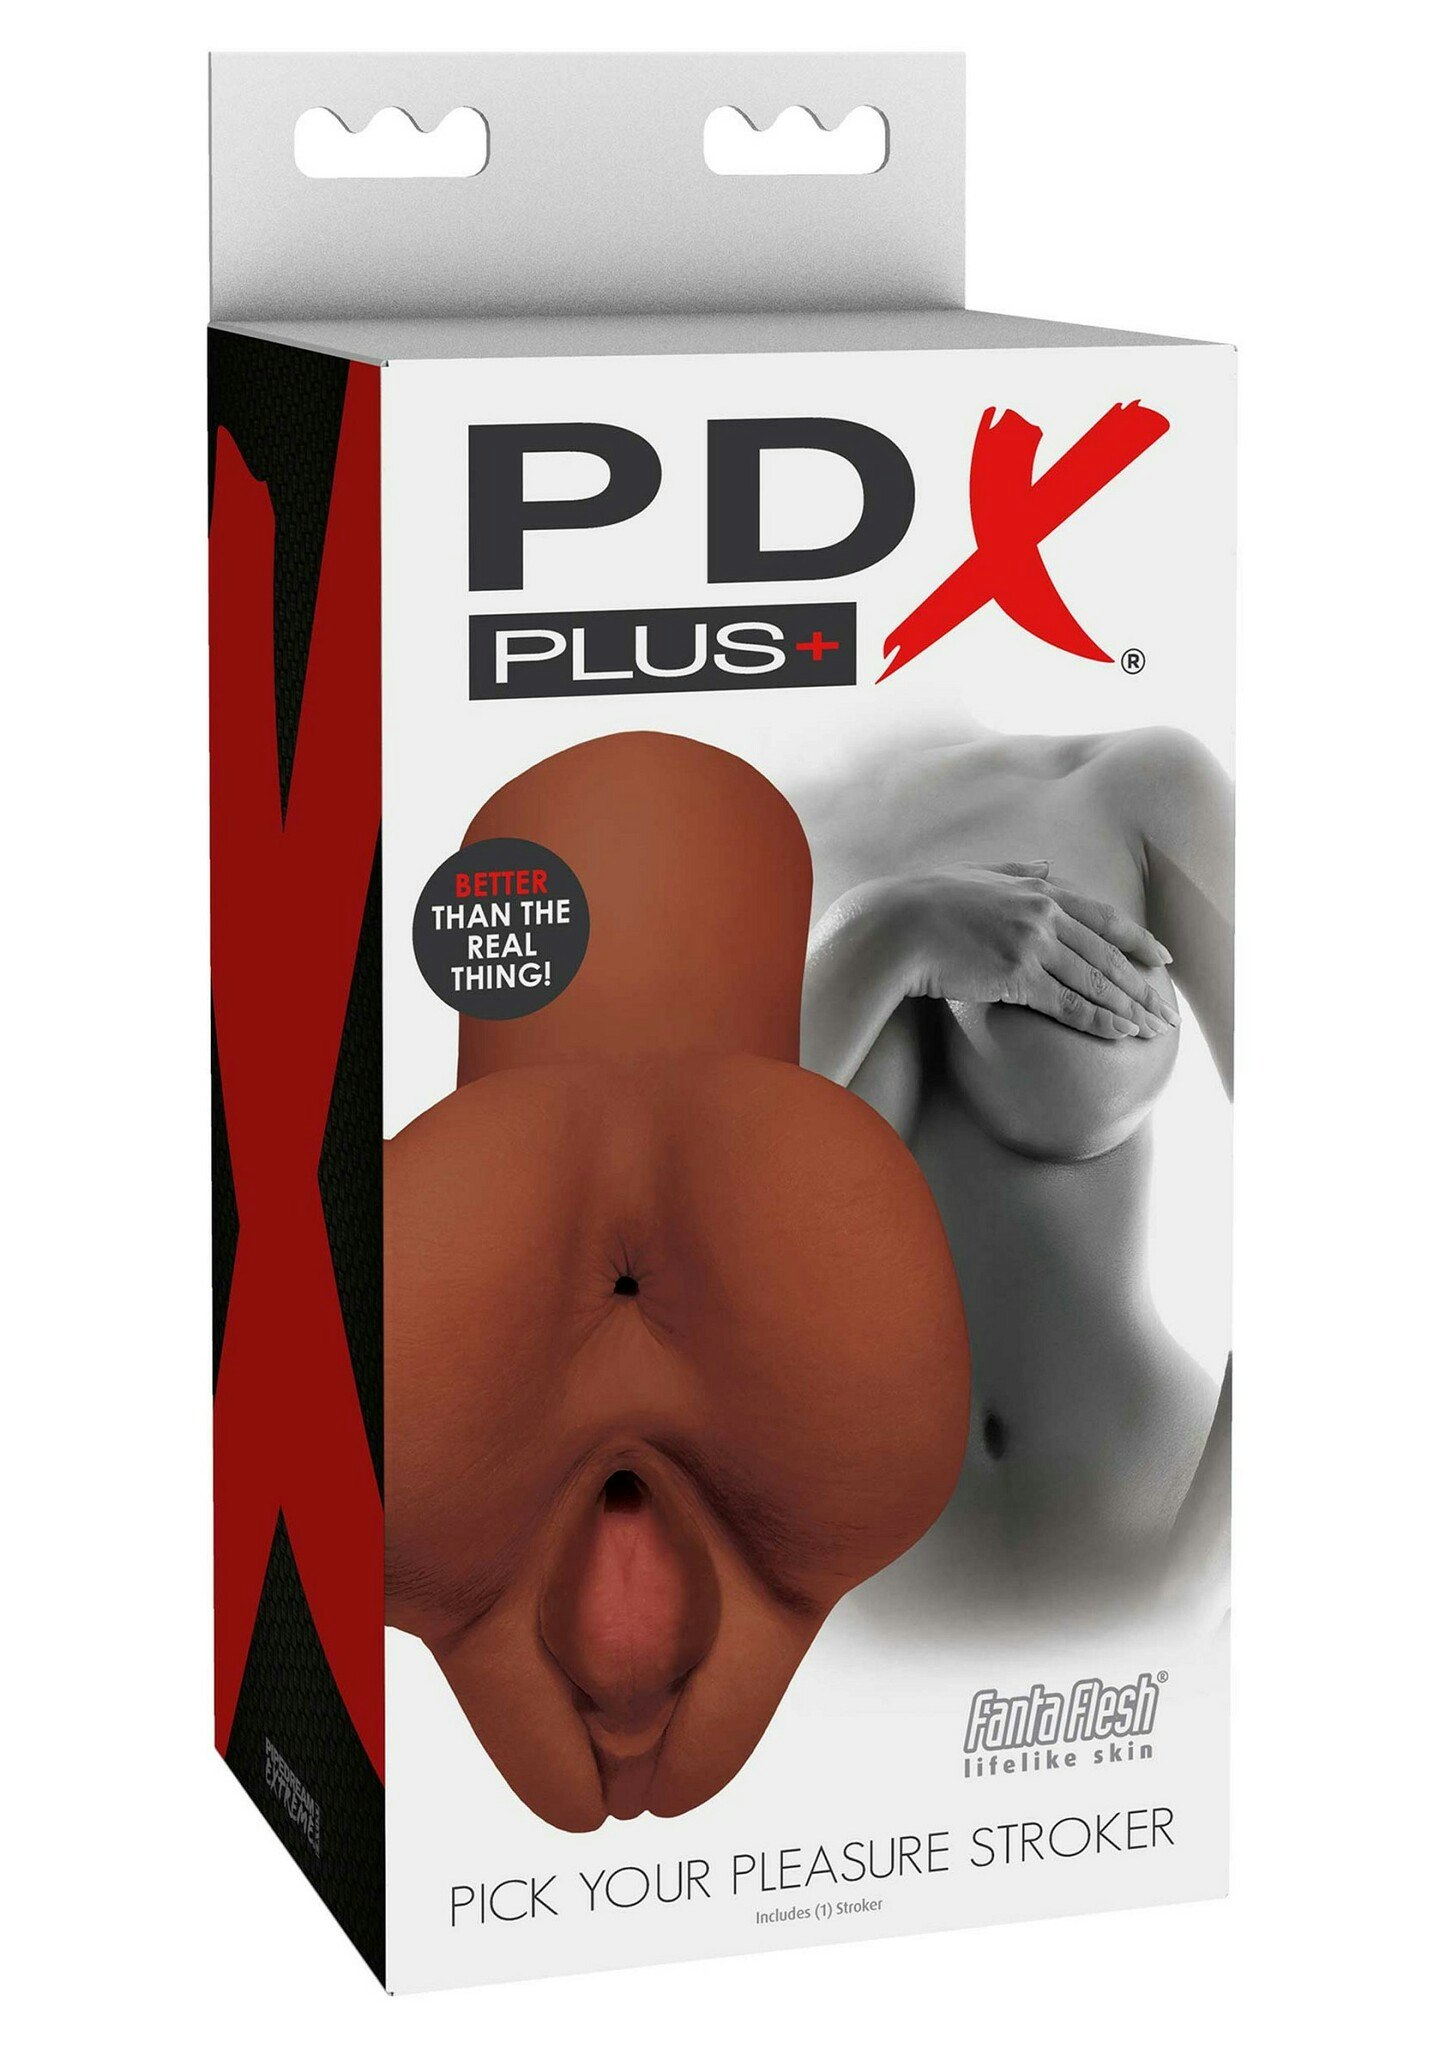 PDX Plus -Pick Your Pleasure Stroker, Dark skin tone